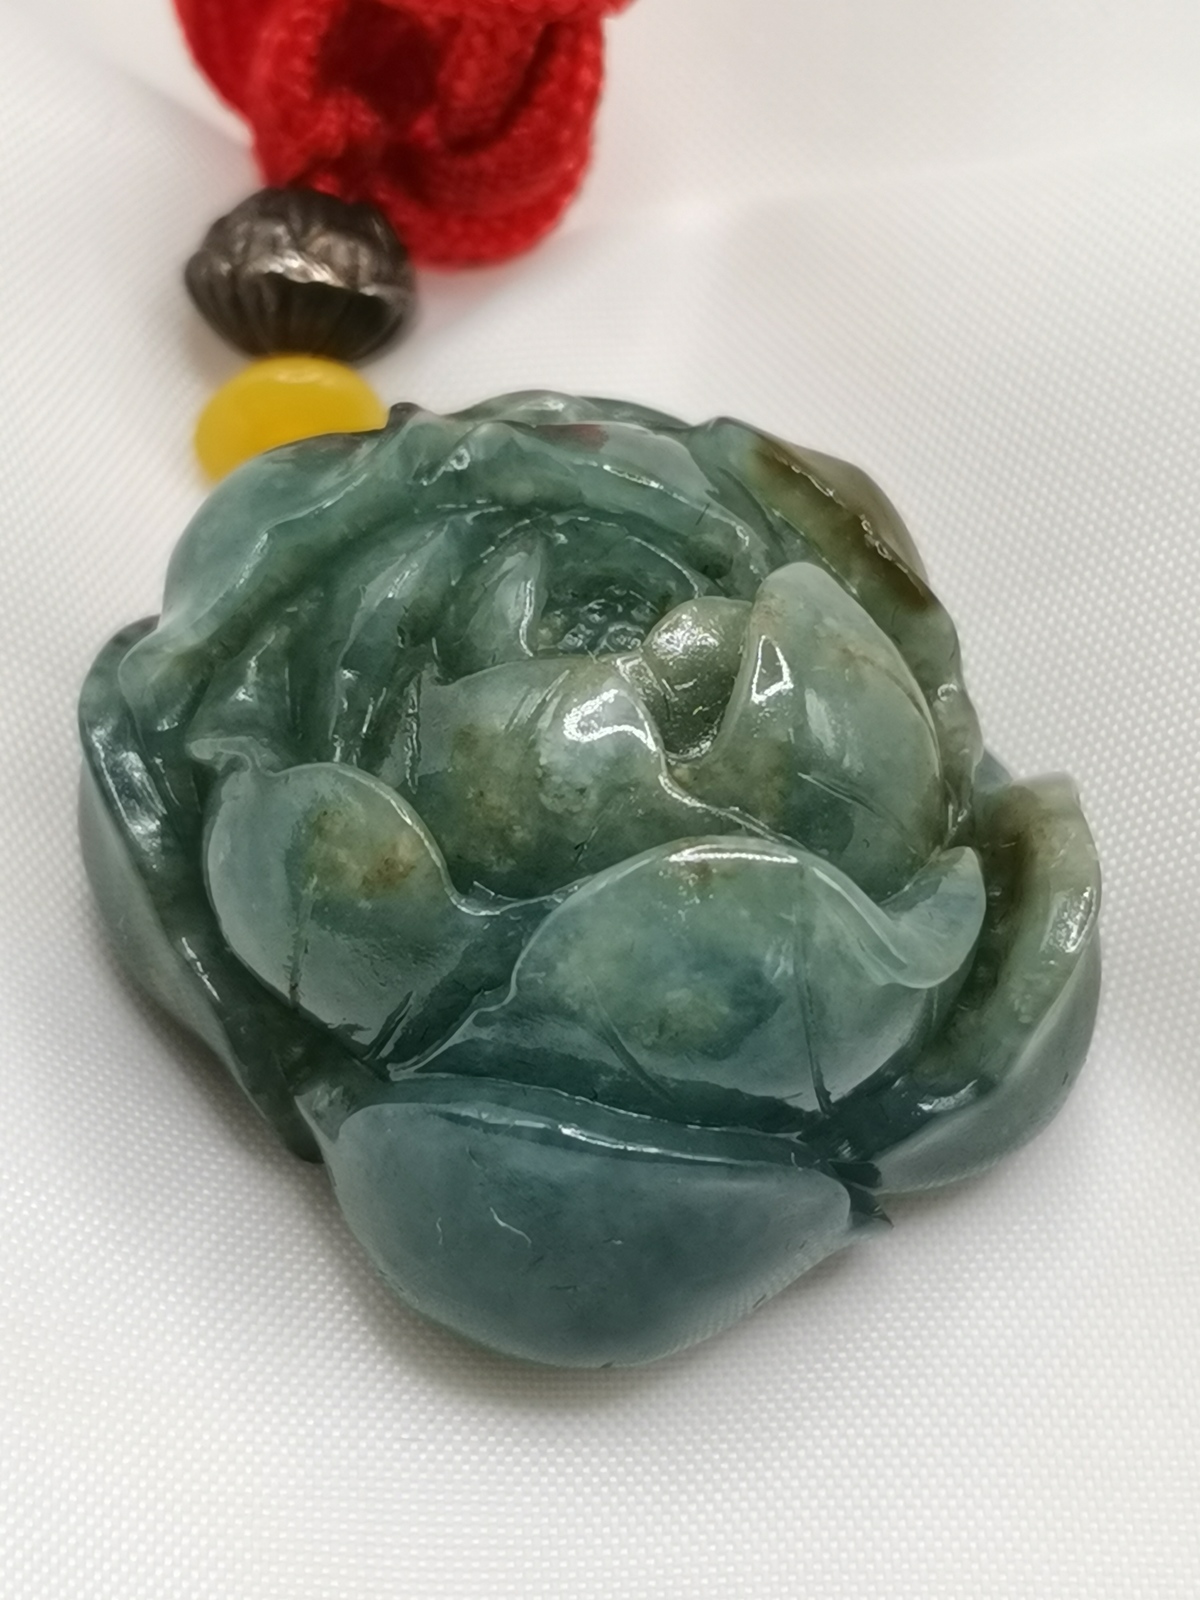 Primary image for Icy Ice Green 100% Natural Burma Jadeite Jade Peony Flower Pendant # 141 carat #